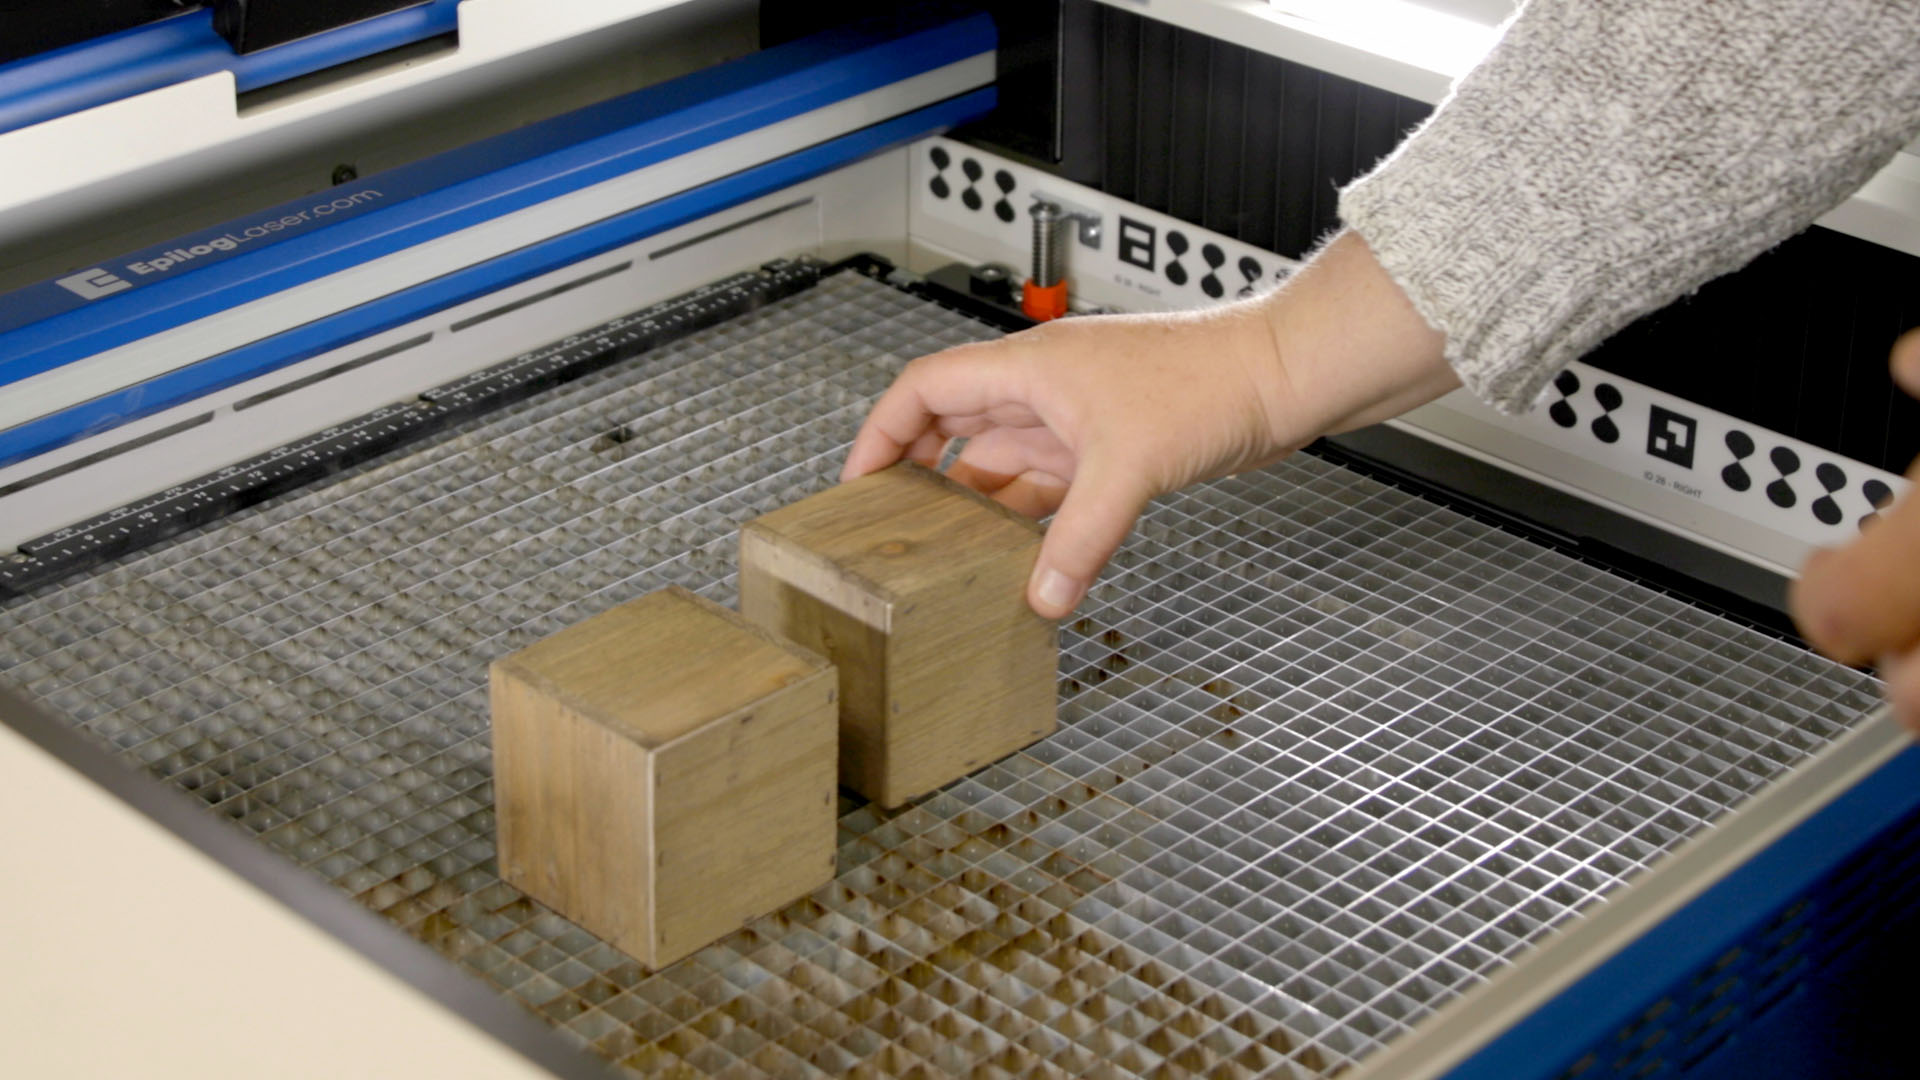 Placing wooden planter box in laser machine